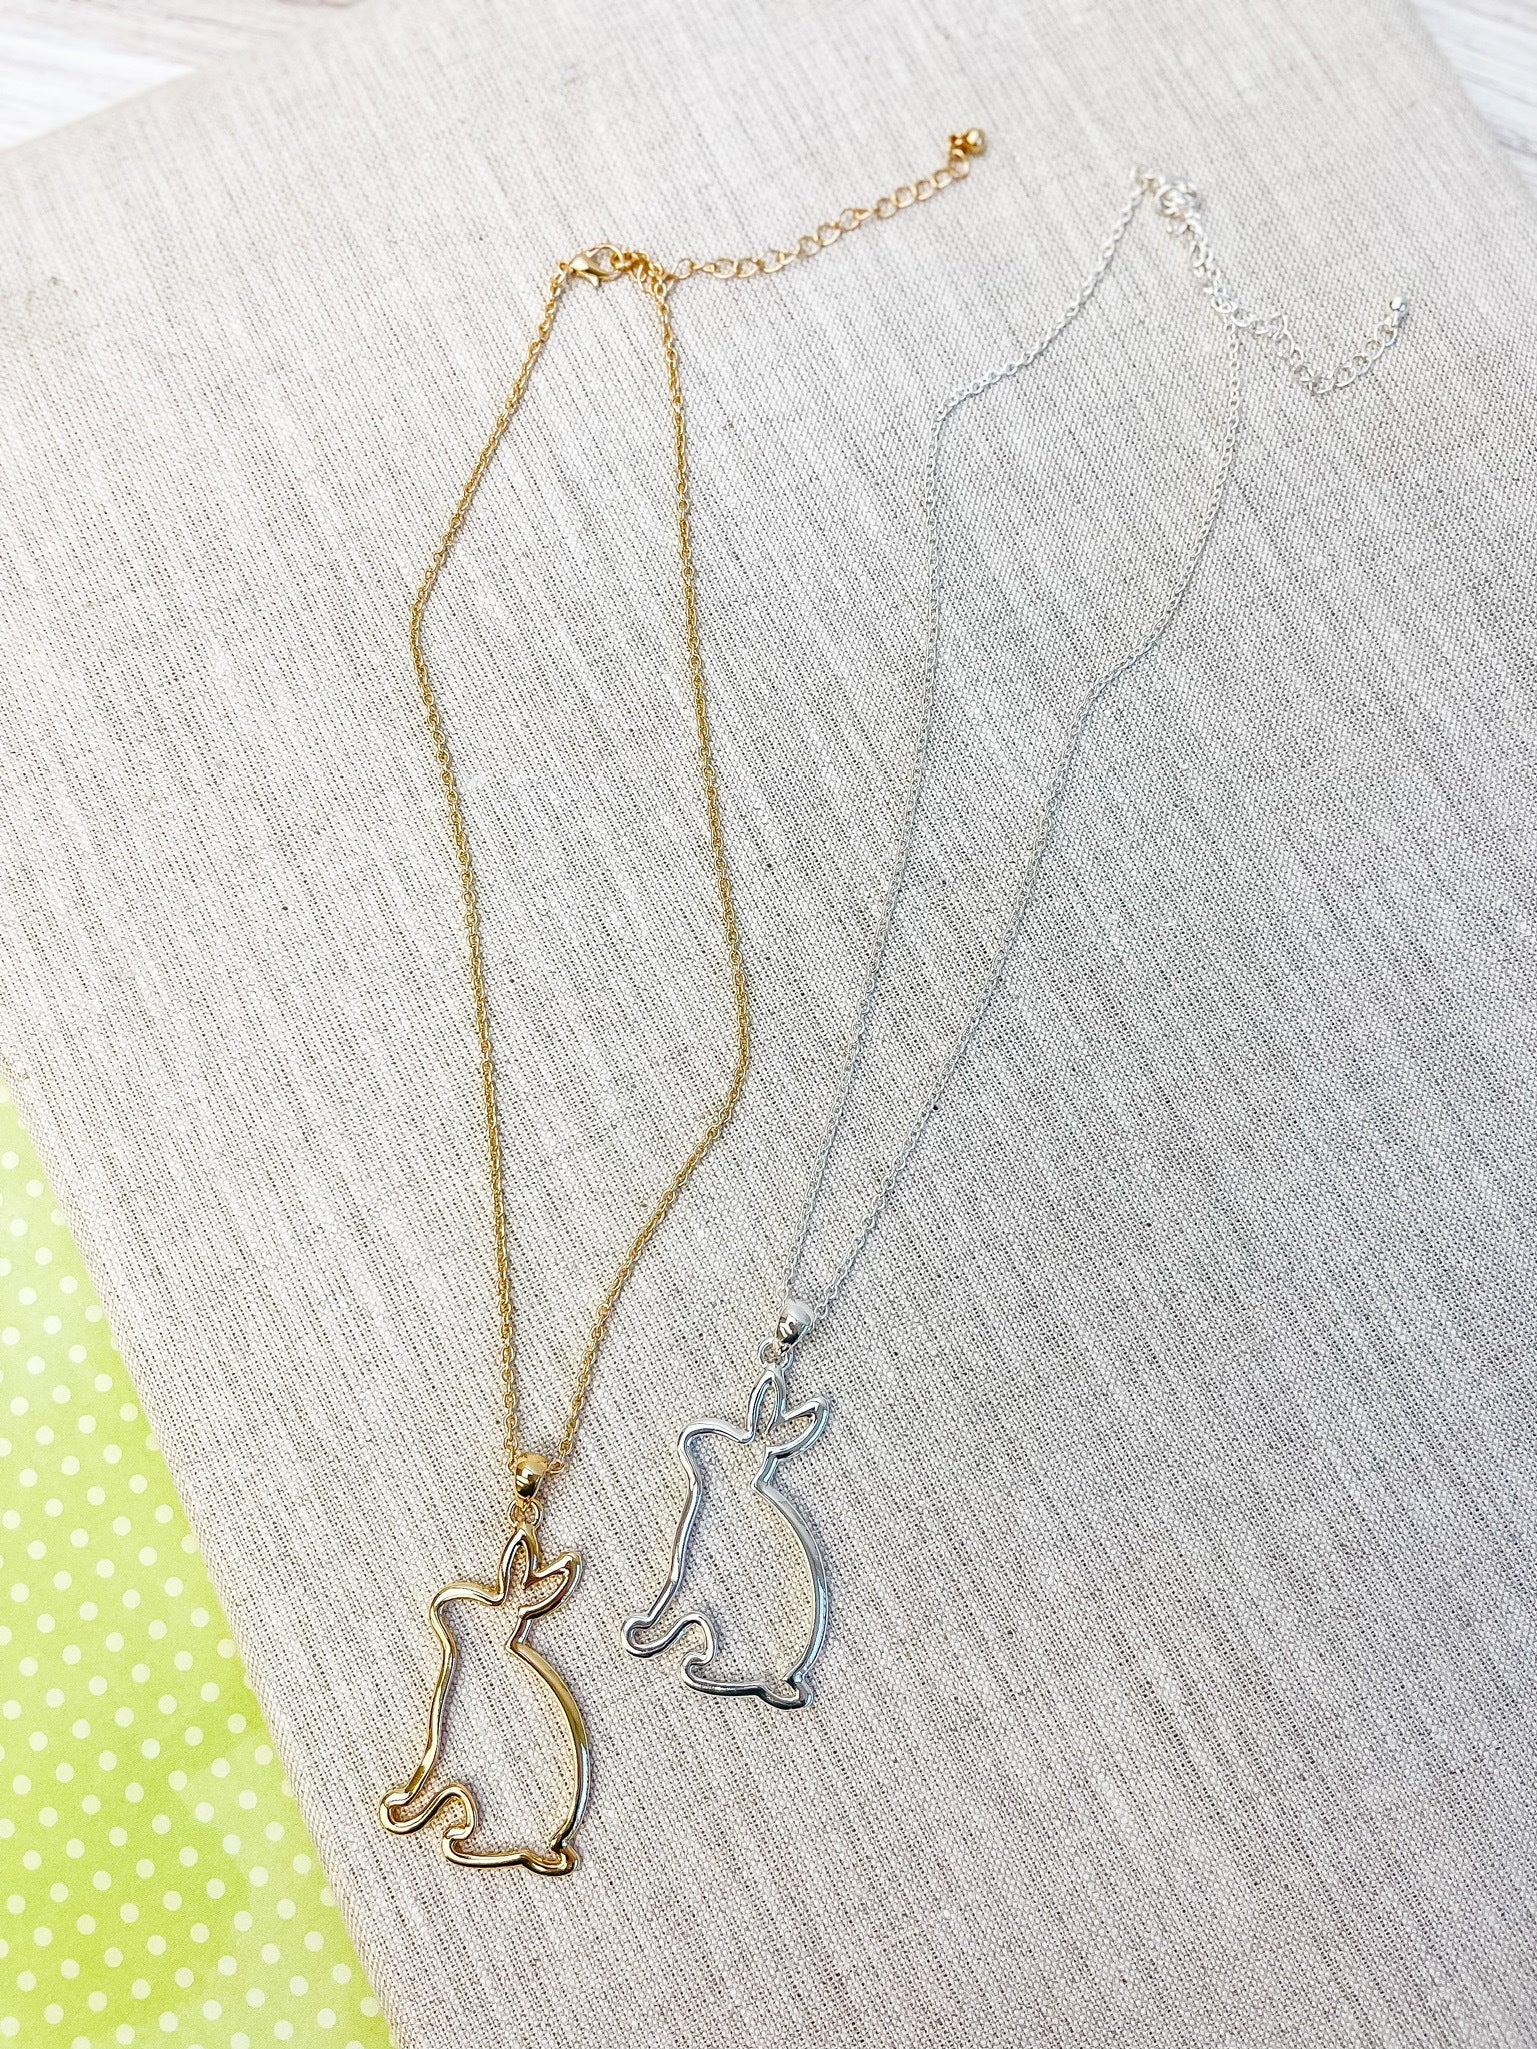 Bunny Cutout Pendant Necklace - Gold